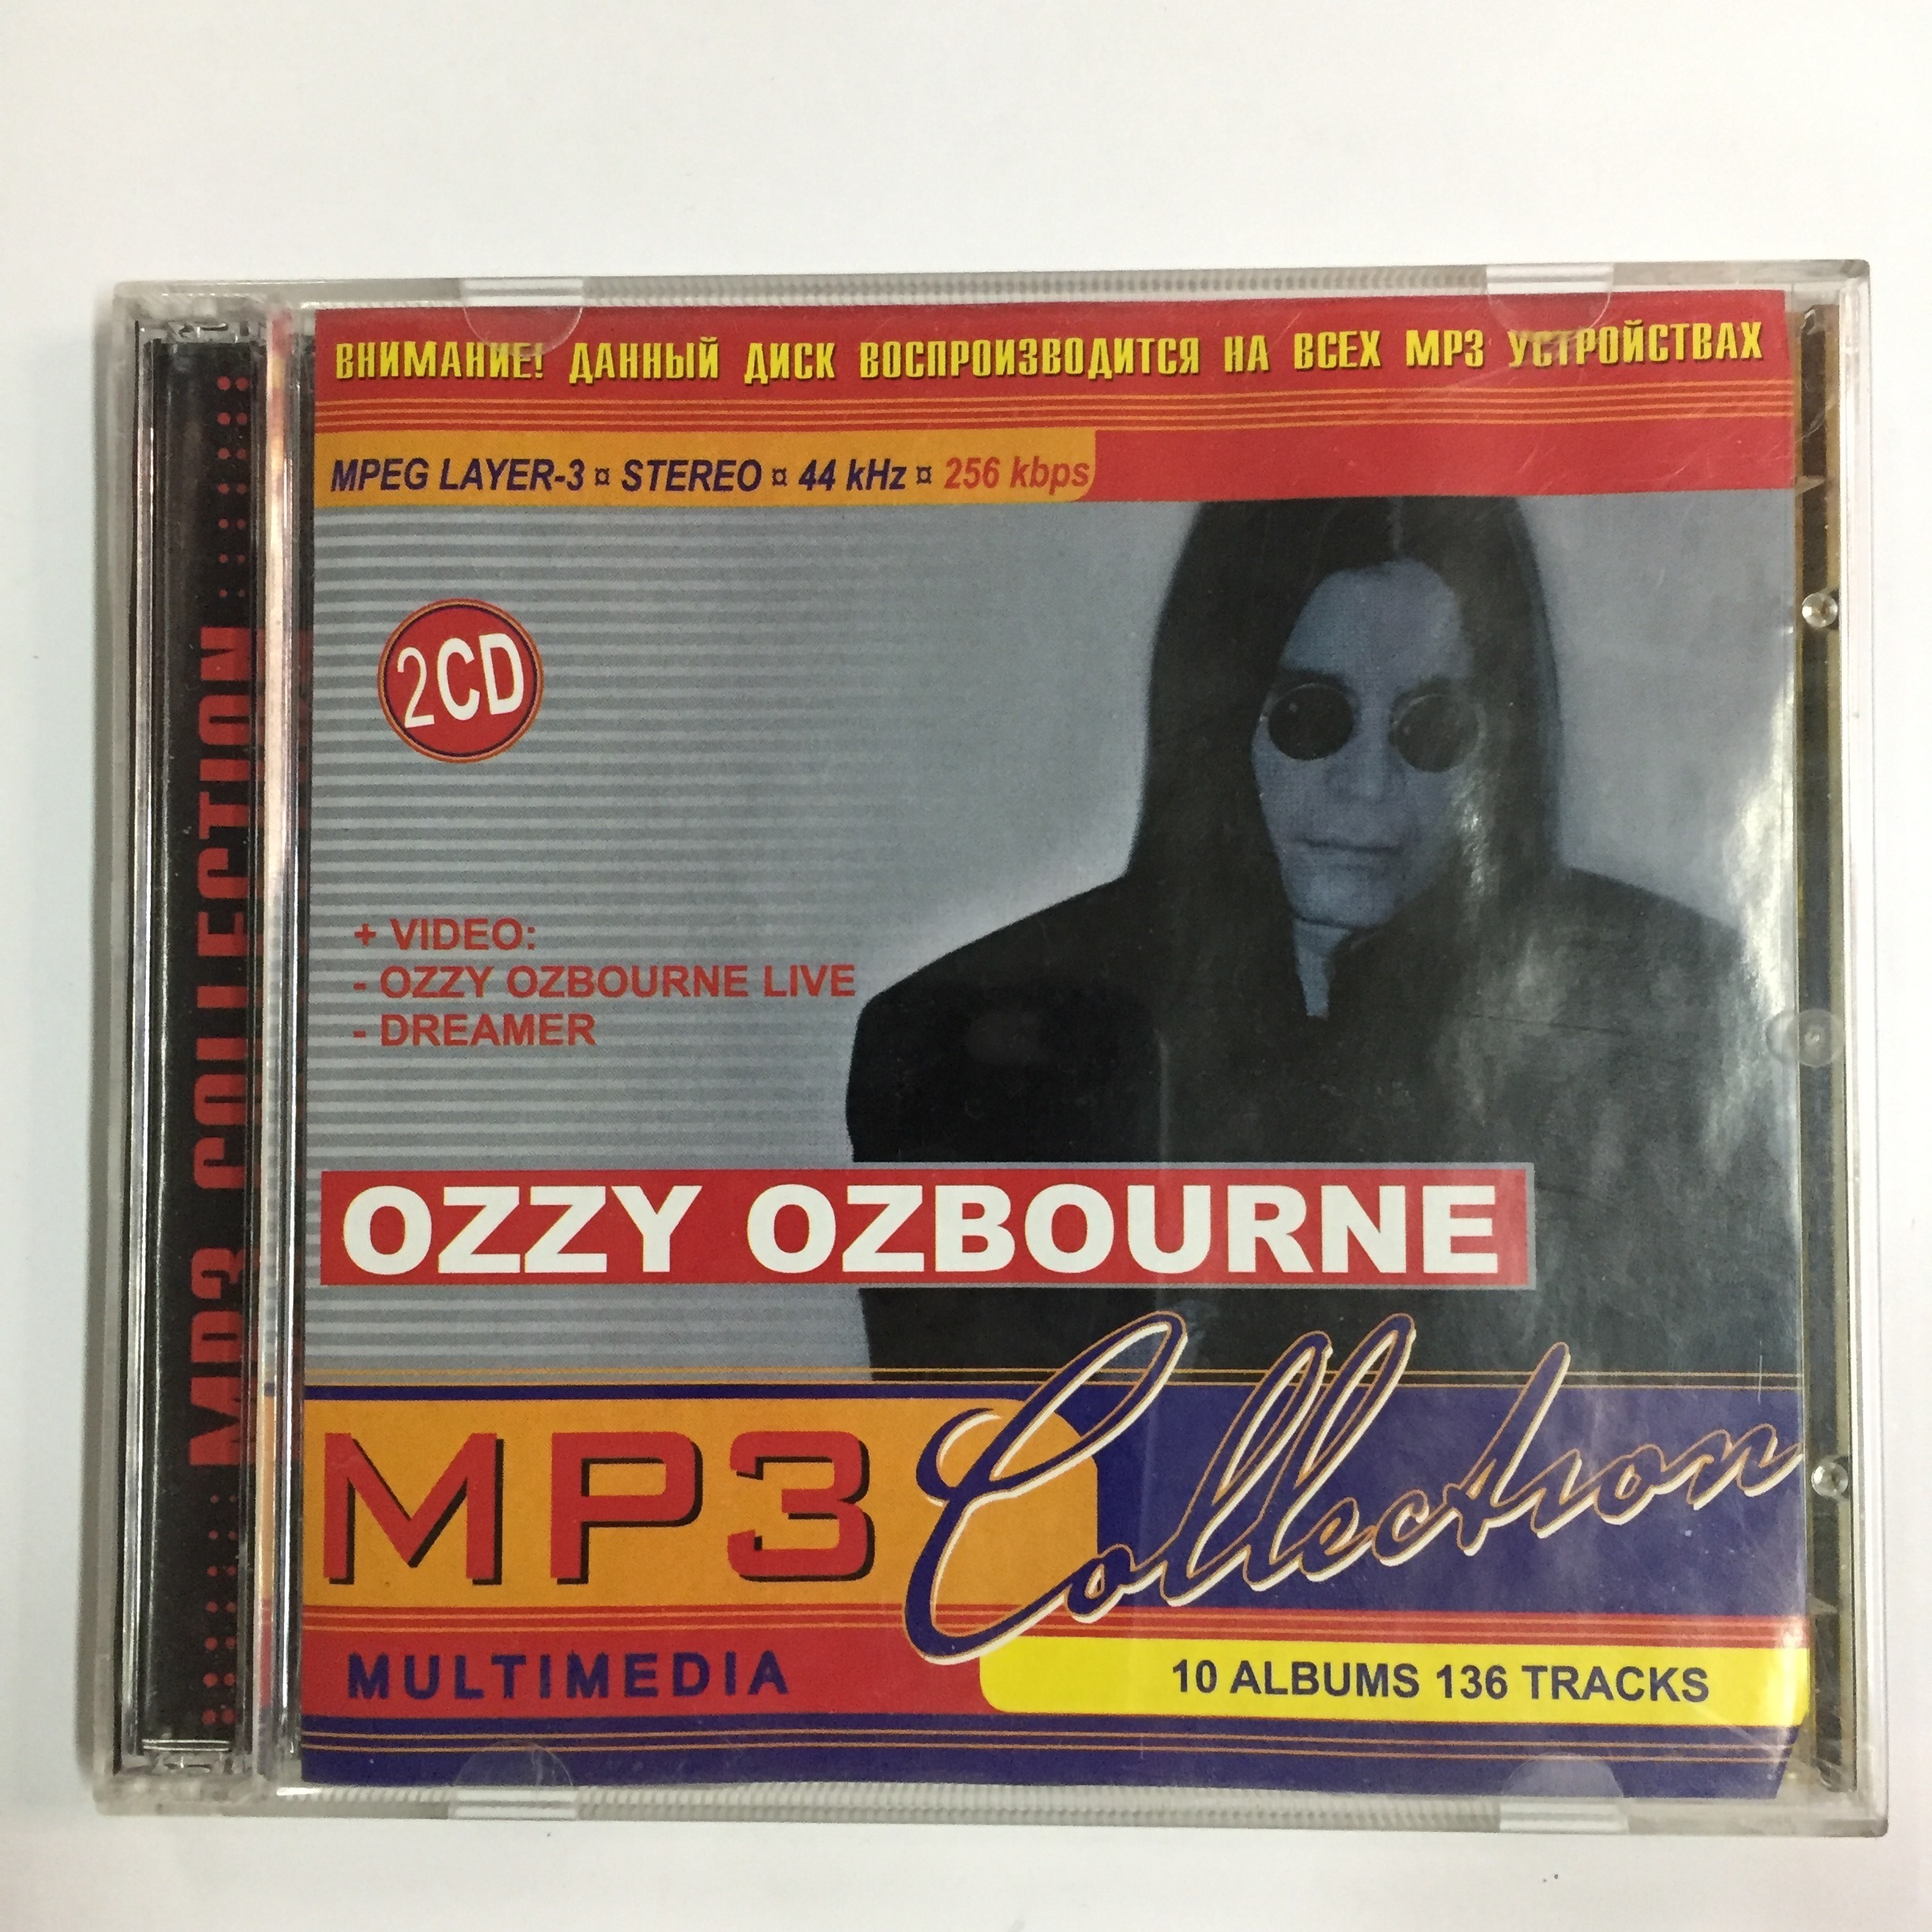 Альбом mp 3. Классическая музыка mp3 collection. Редактор альбома mp3. Постер а3 Ozzy Ozbourne.